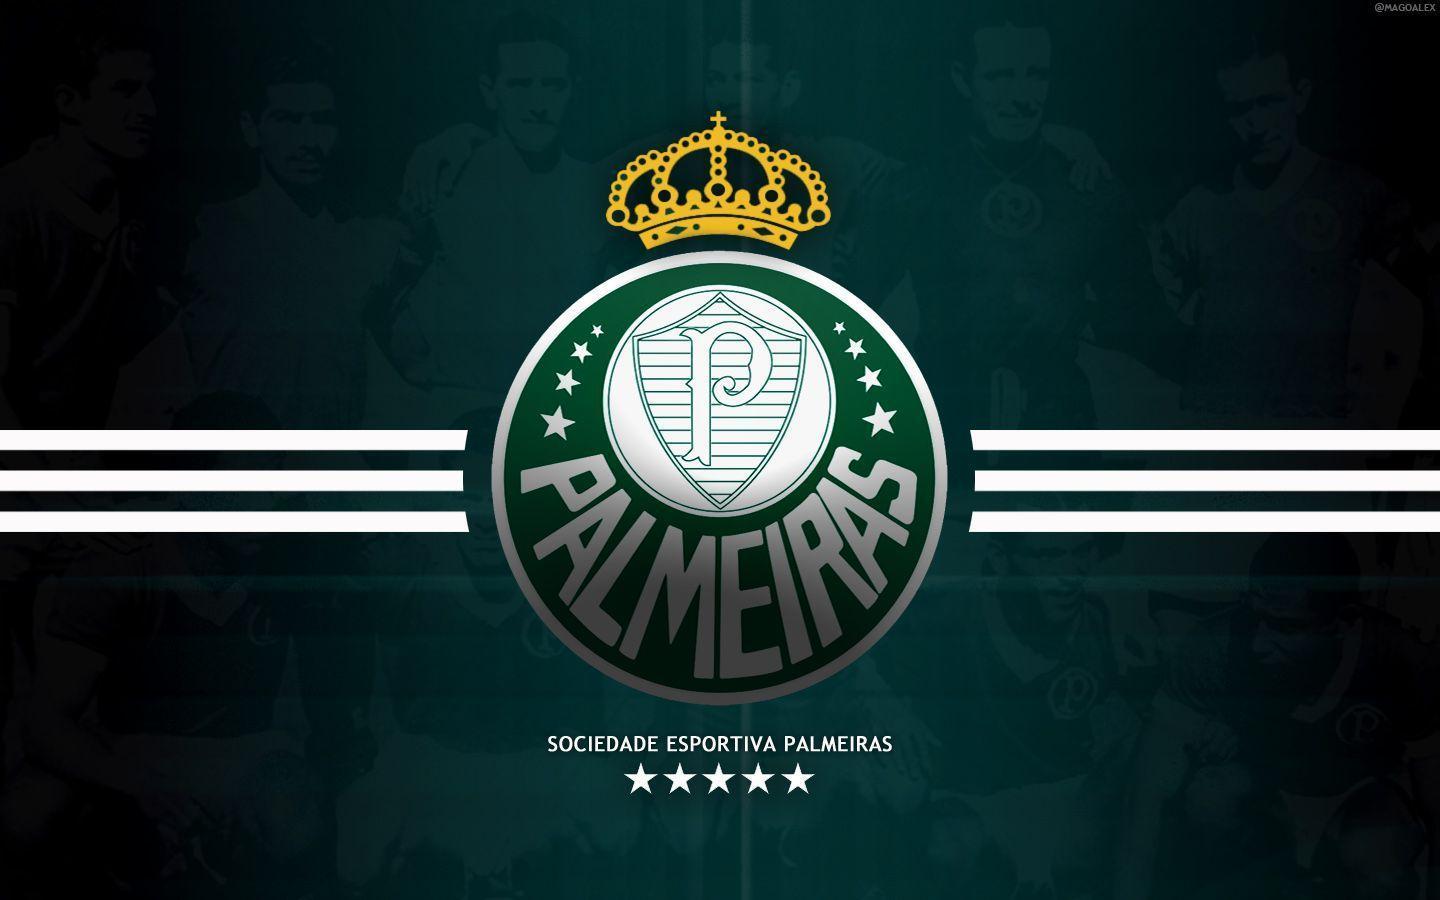 Palmeiras wallpaper download